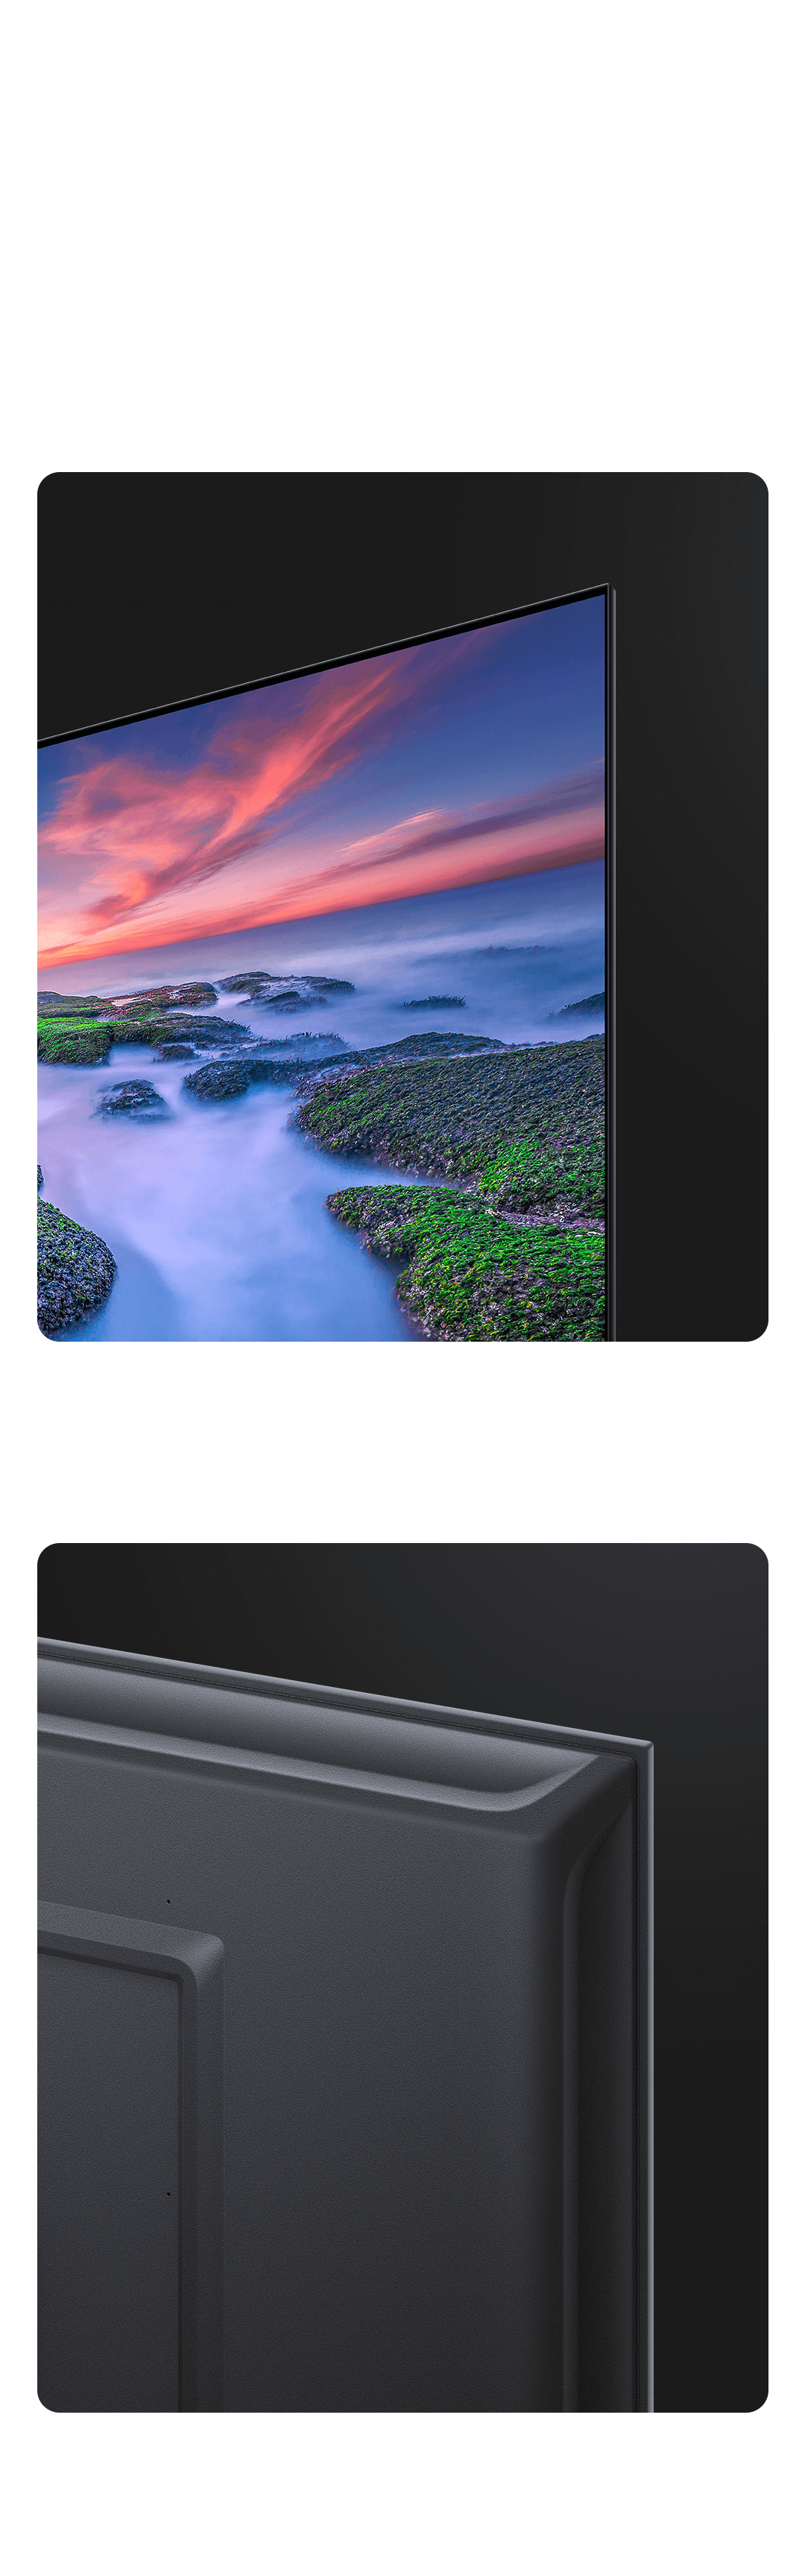 Pantalla Smart TV - Xiaomi A2 - 43 Pulgadas FHD 1080P - 41569